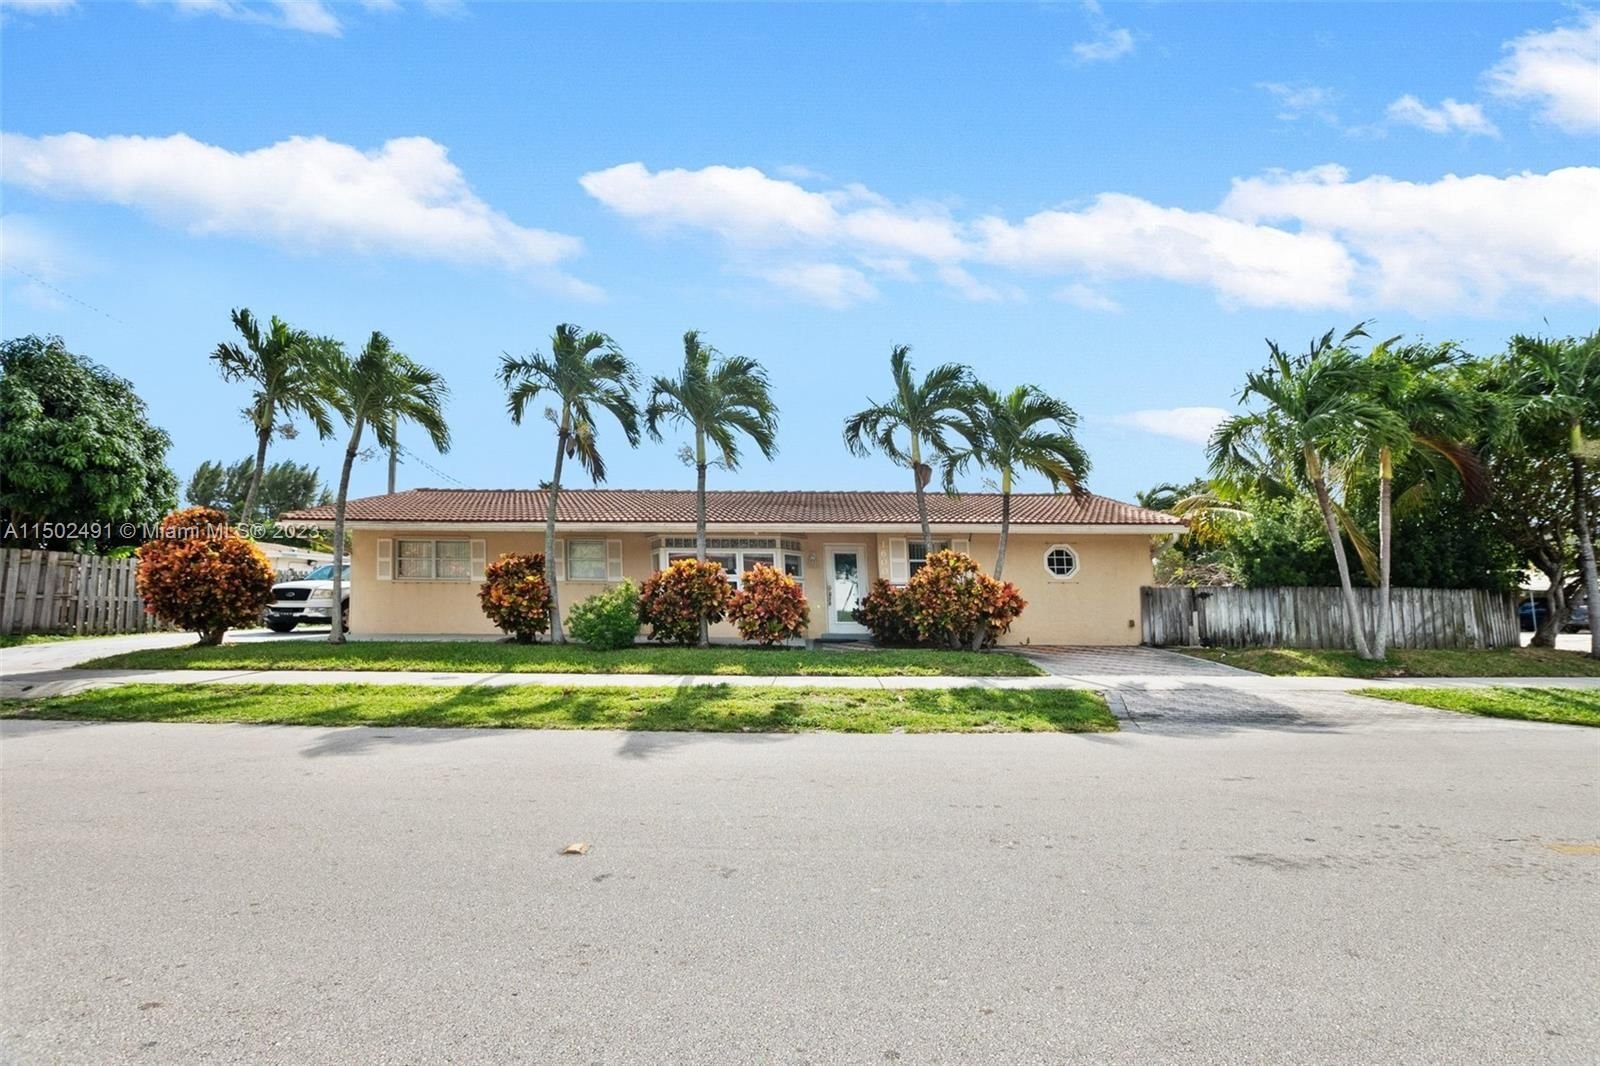 Real estate property located at 1600 39 Steert, Broward County, North Pompano Bach SEC, Pompano Beach, FL